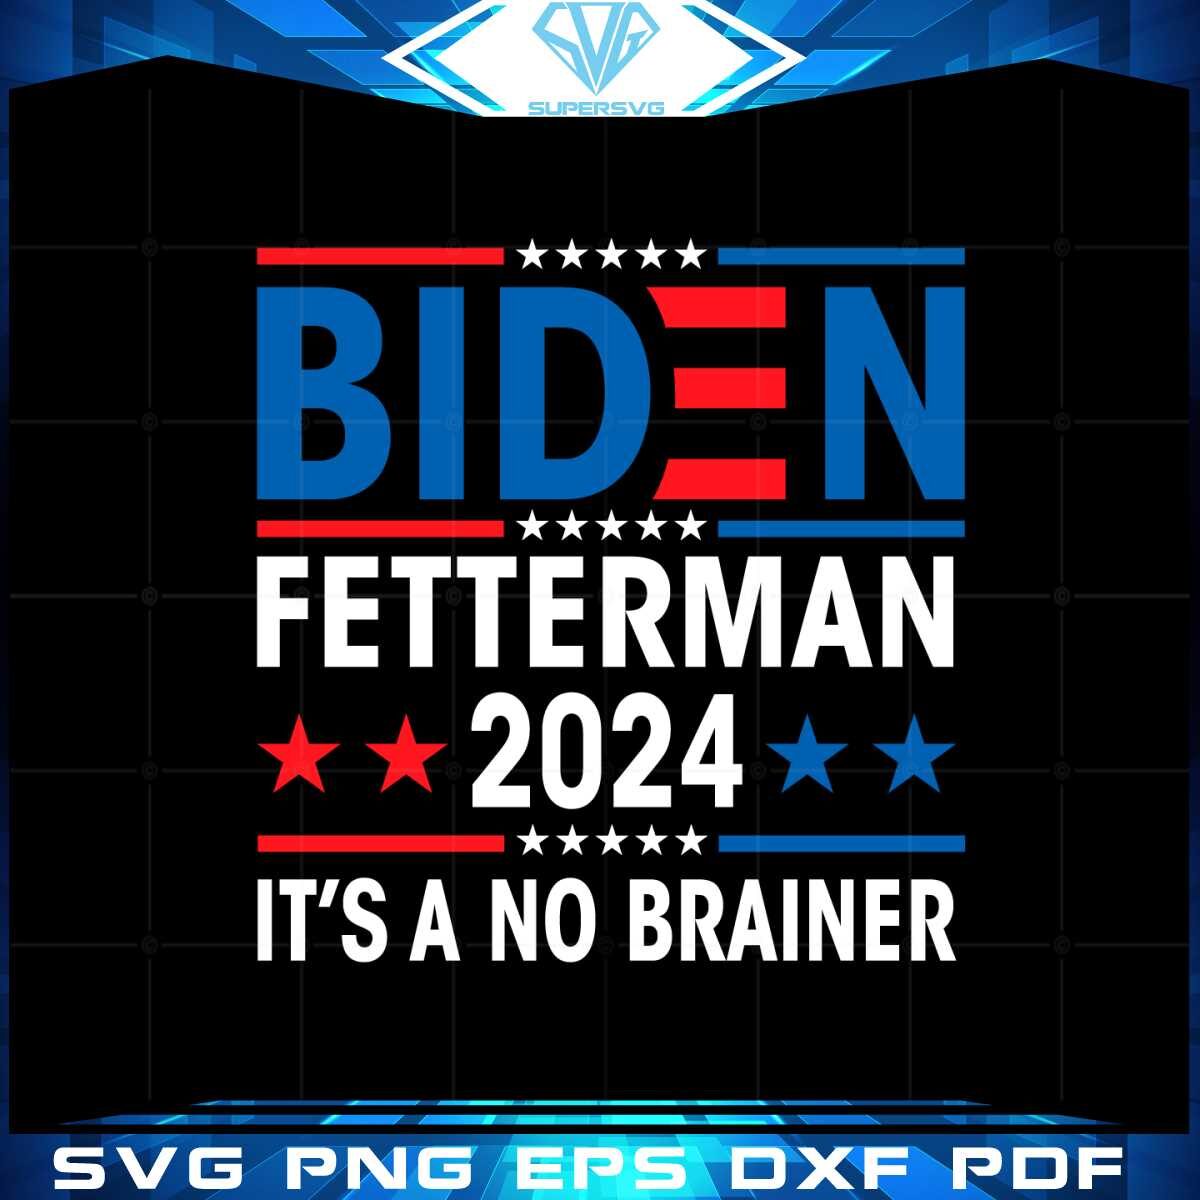 joe-biden-fetterman-2024-its-a-no-brainer-political-anti-biden-svg